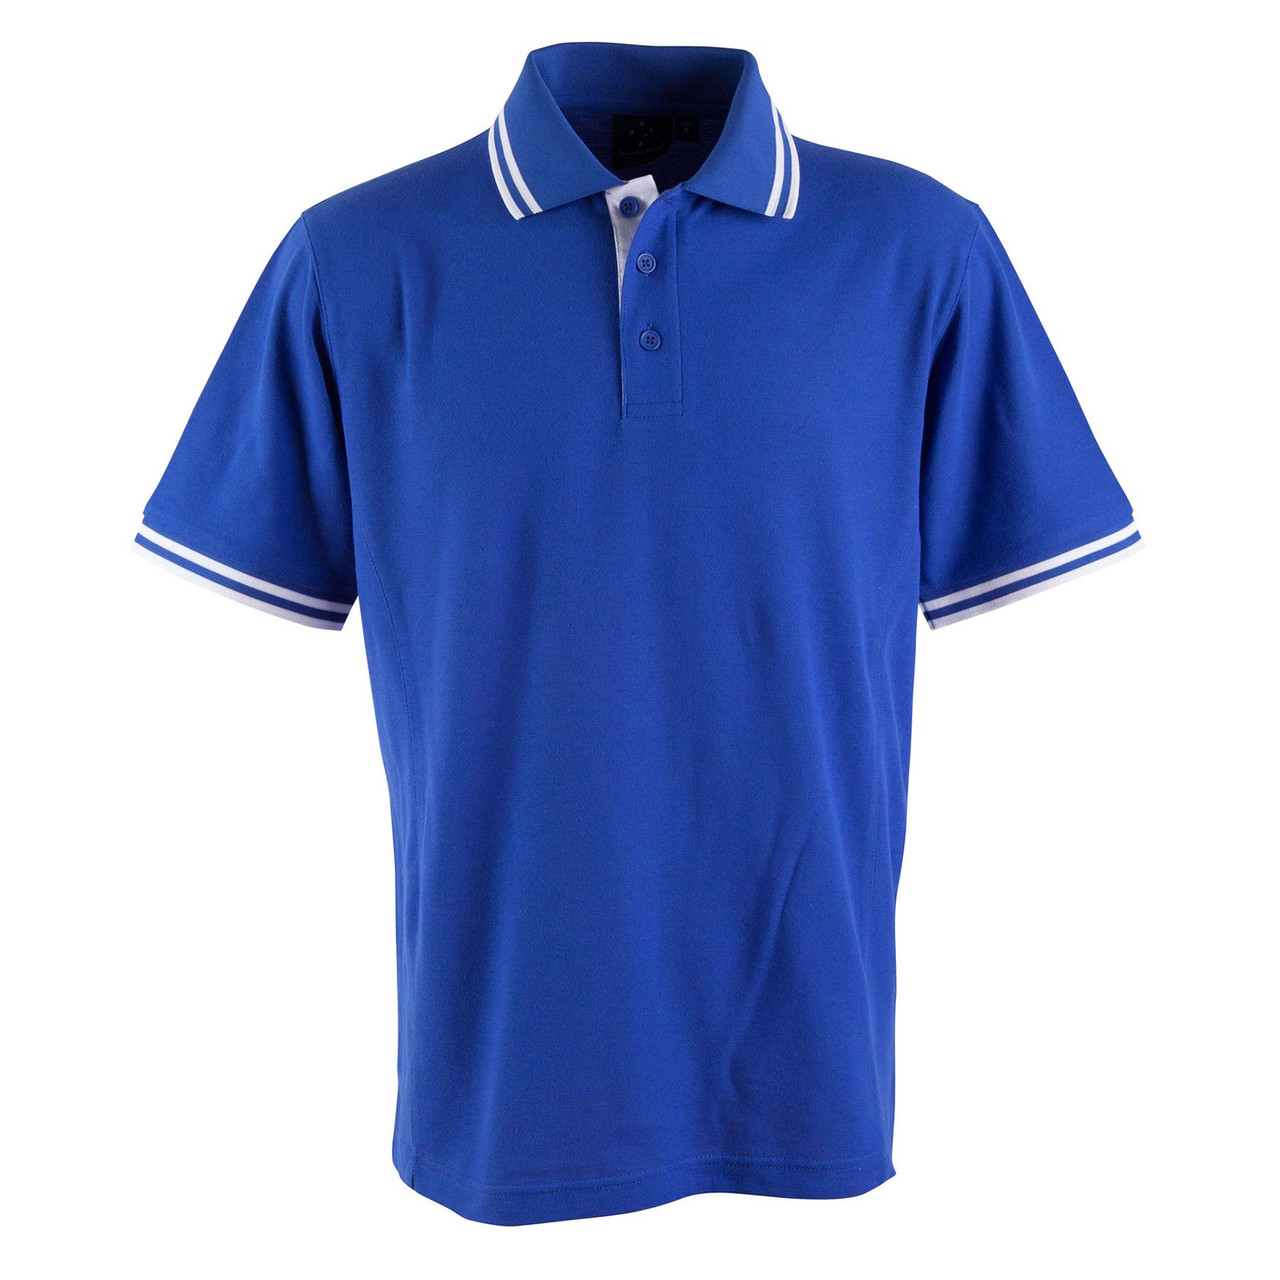 Mens Truedry Sports Contrast Trim Polo Shirts | Shop Team Wear Online